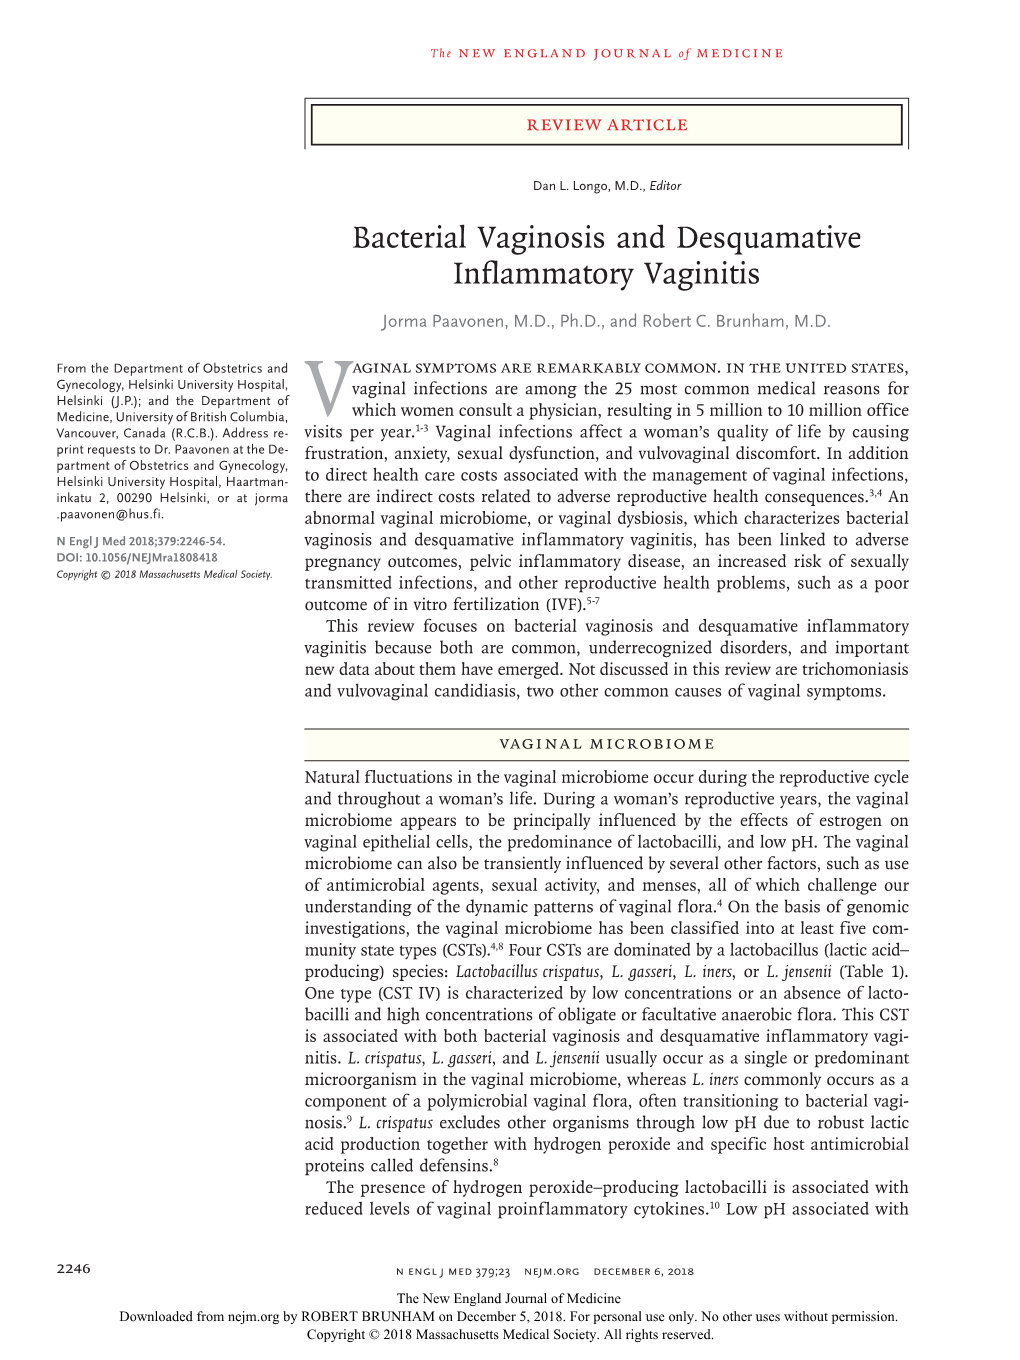 Bacterial Vaginosis And Desquamative Inflammatory Vaginitis Docslib